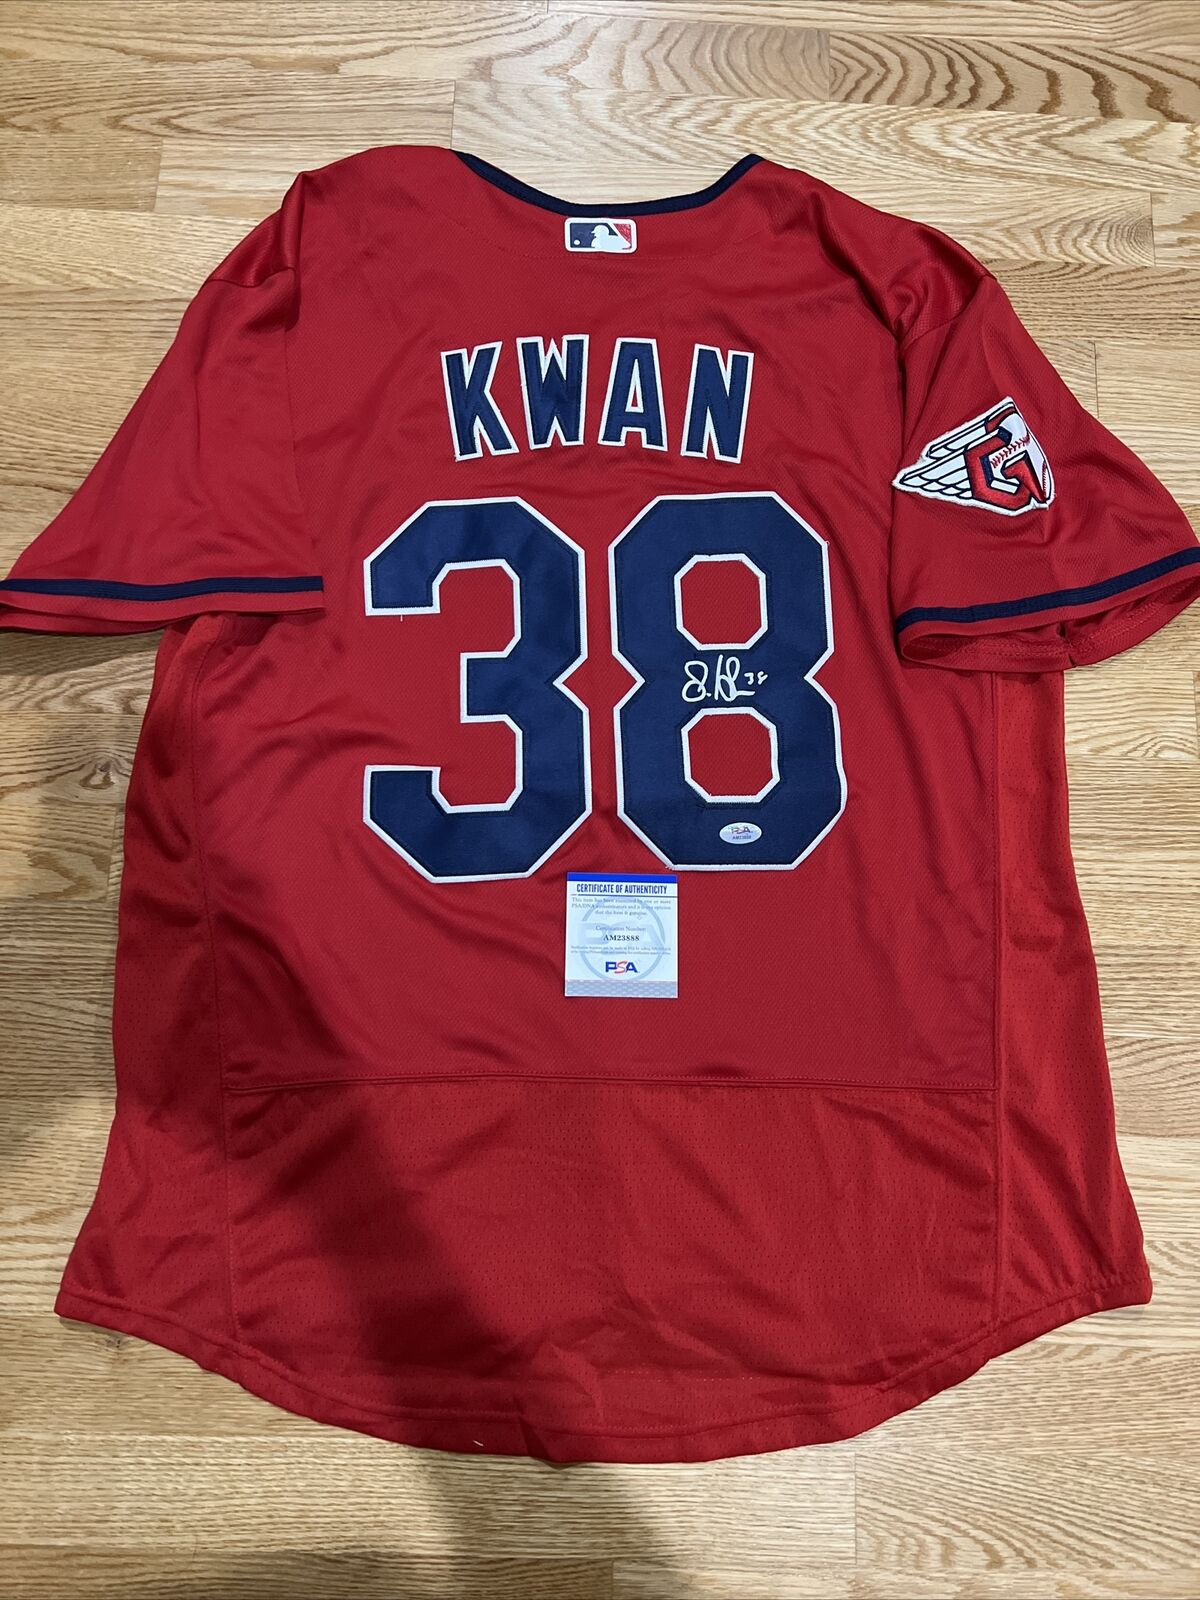 Steven Kwan Signed Cleveland Guardians Jersey PSA DNA Coa Autographed